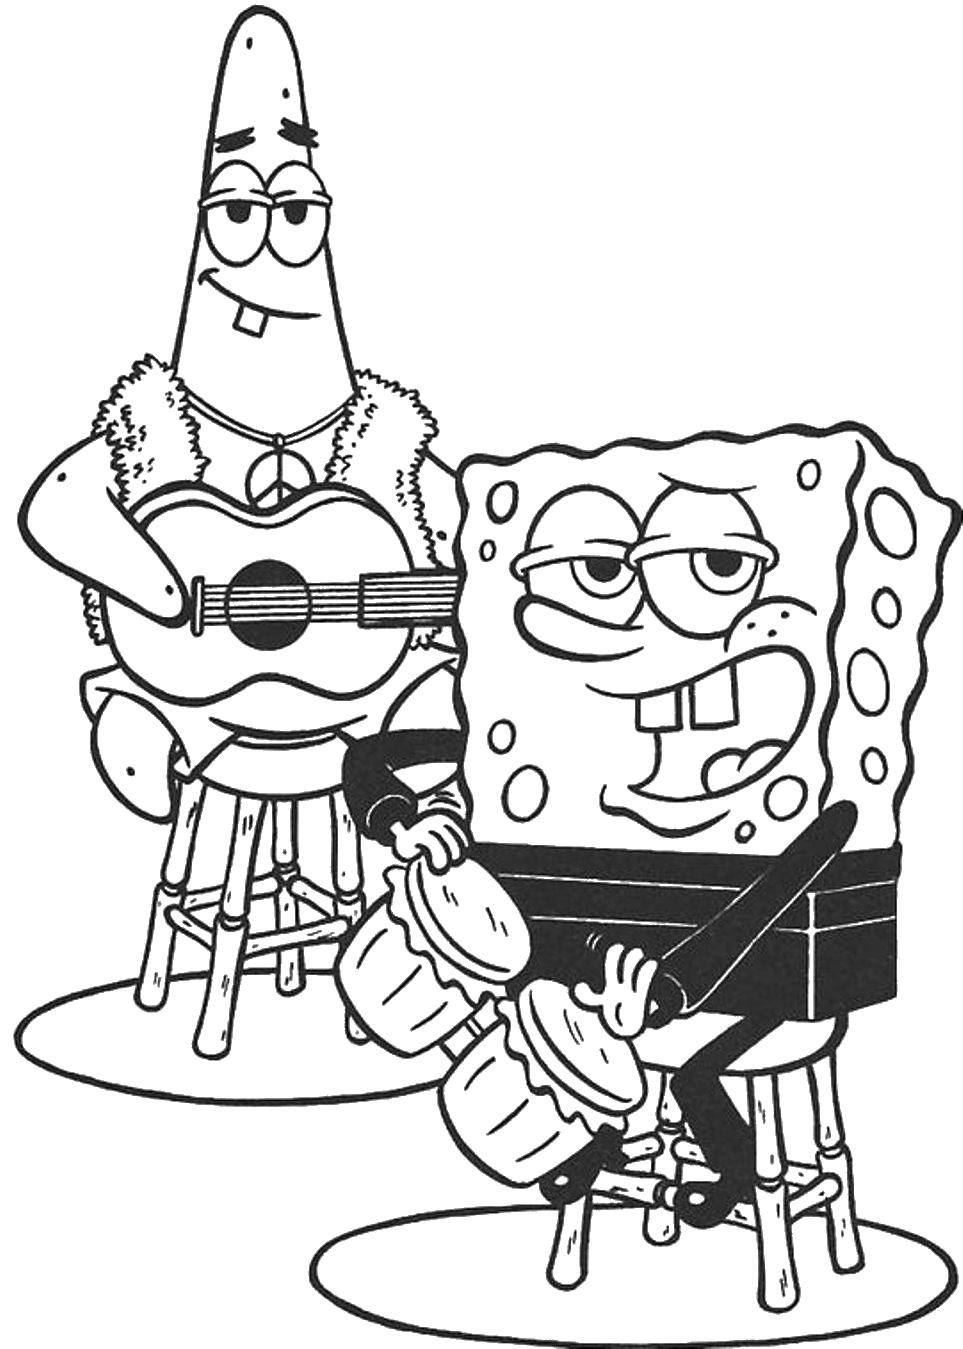 Coloring Spongebob and Patrick are hippies. Category Spongebob. Tags:  Cartoon character, spongebob, spongebob, Patrick.